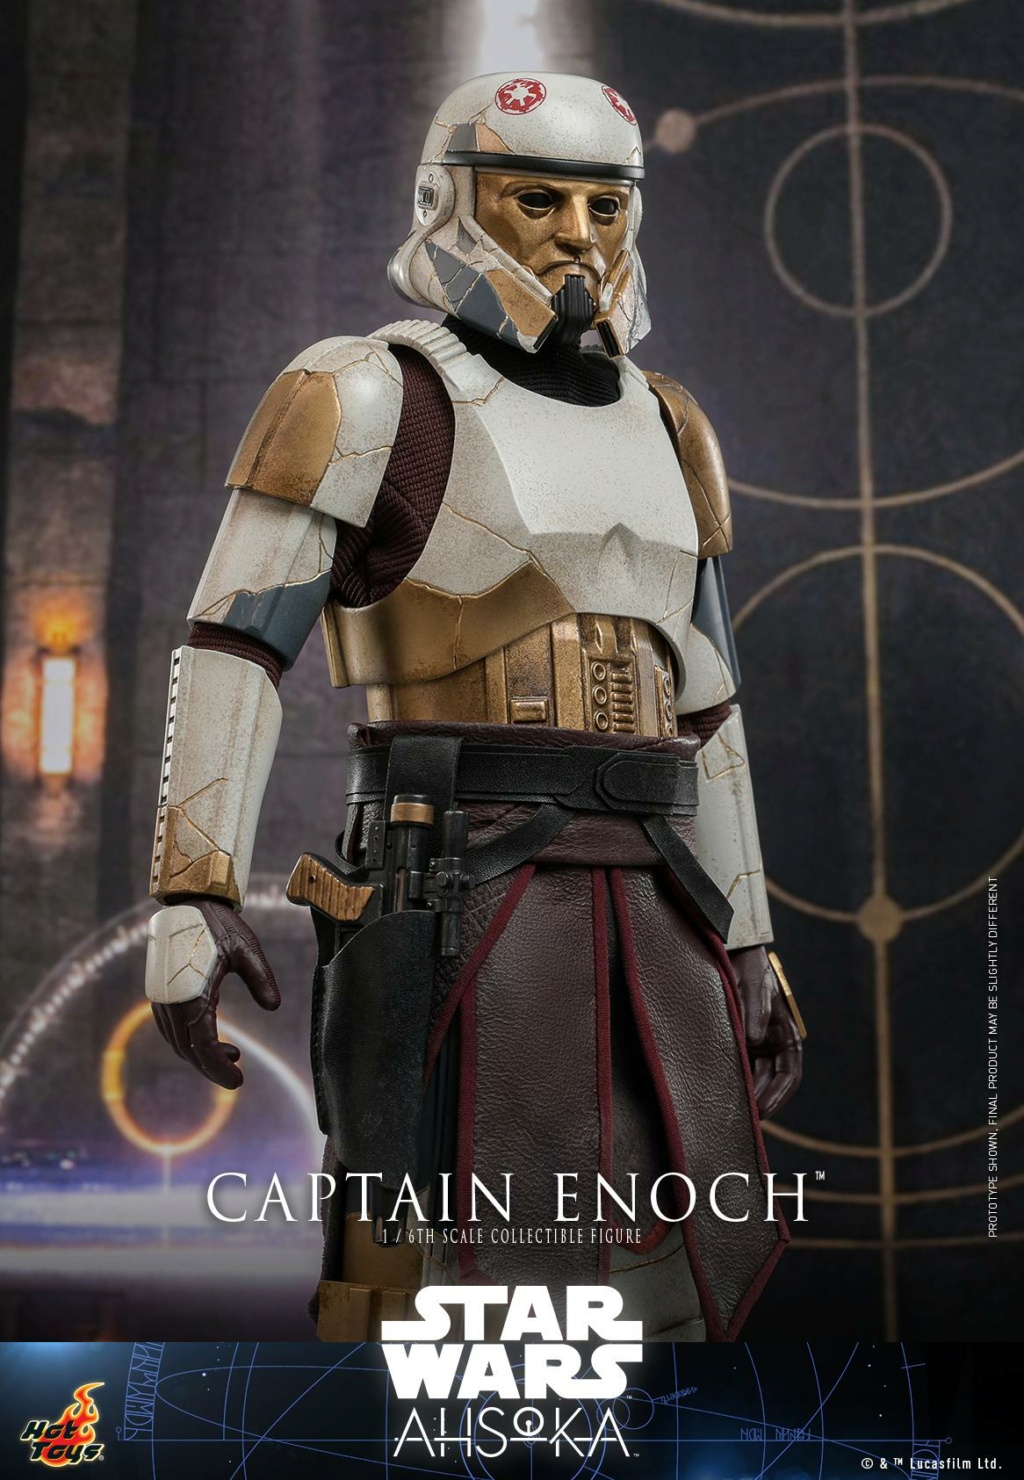 Star Wars: Ahsoka - 1/6th scale Captain Enoch Collectible Figure - Hot Toys Capta100